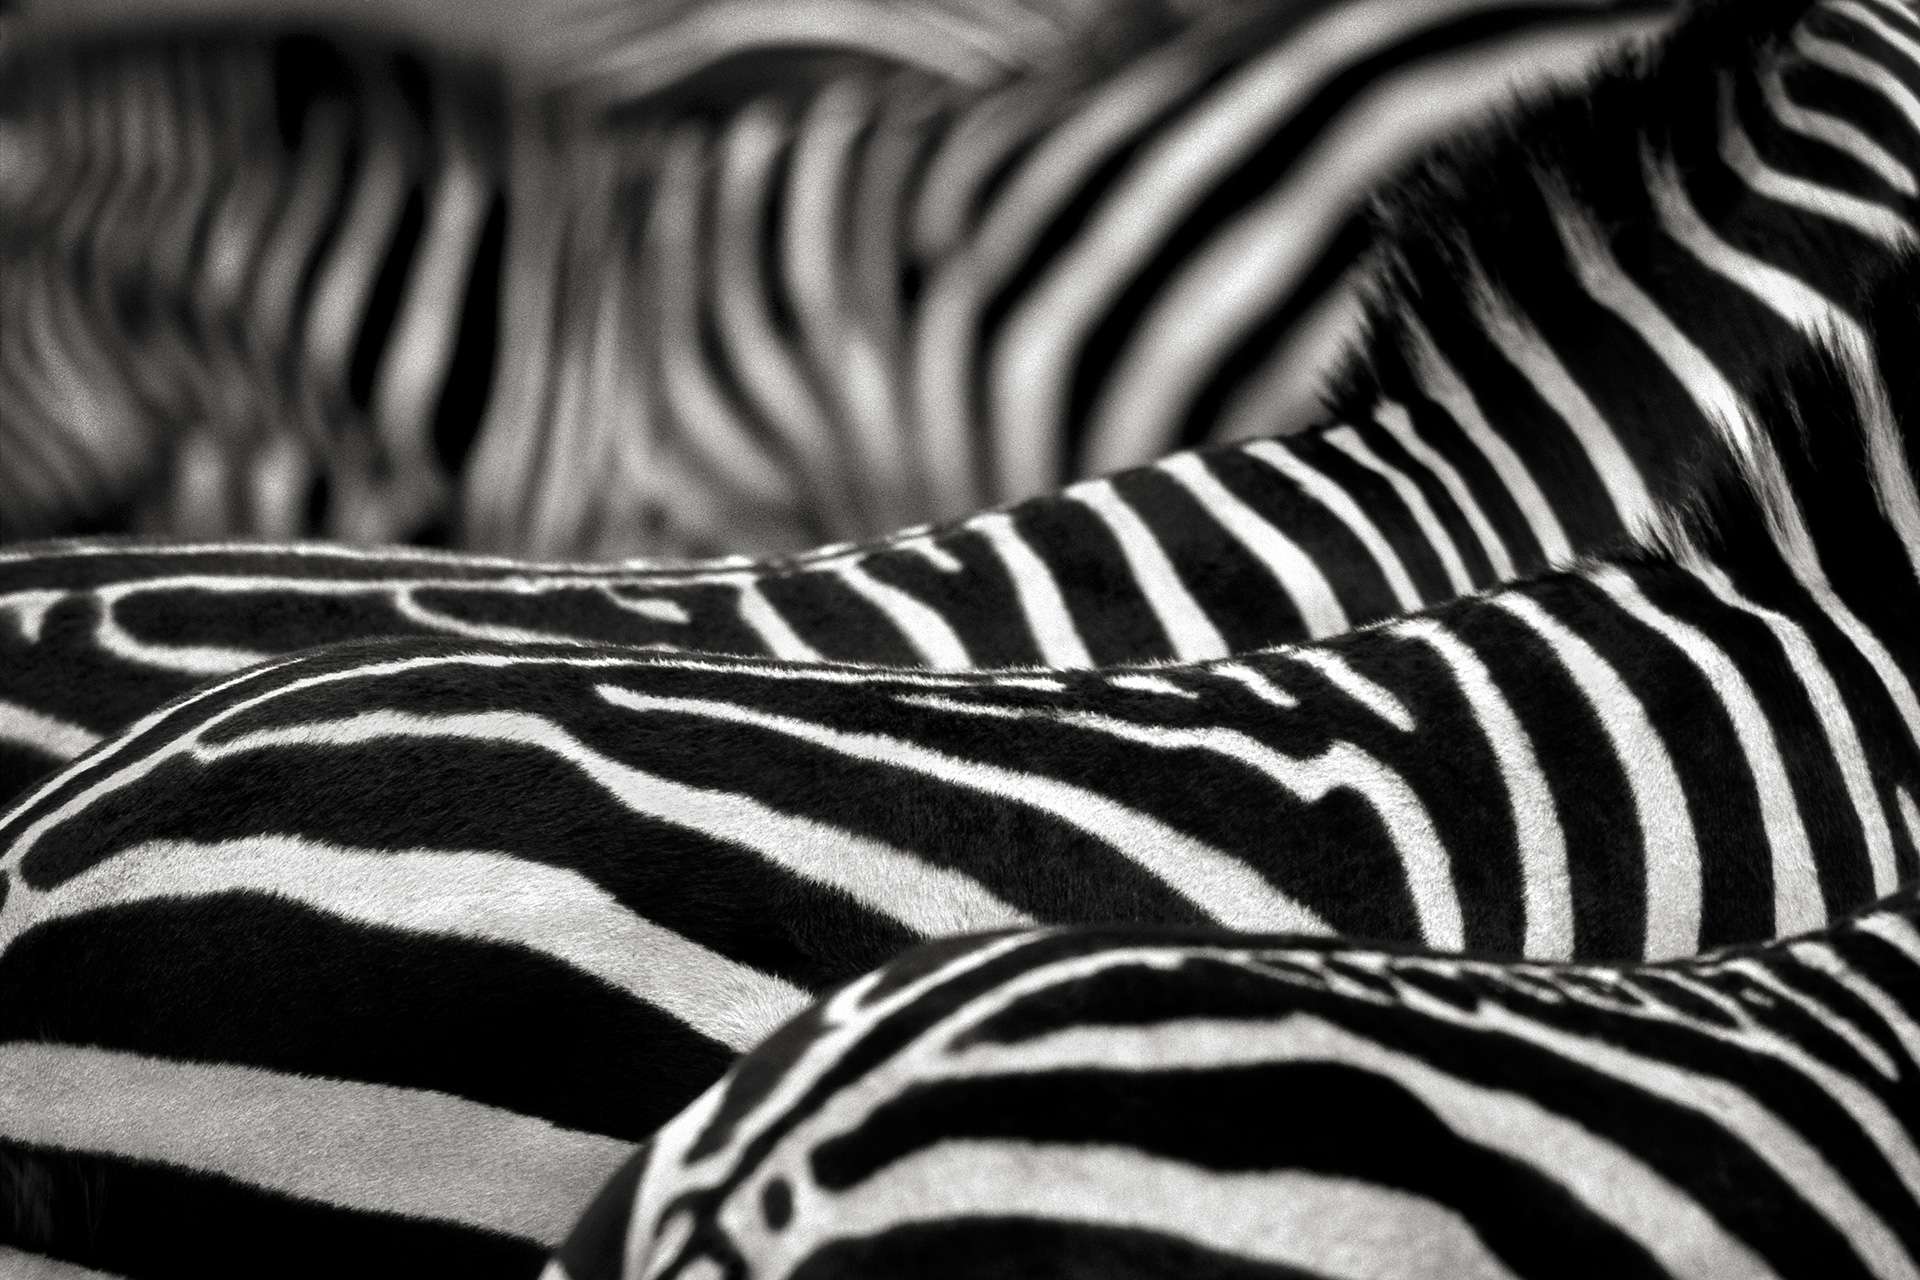 Photographie de Gilles Martin : zèbres des plaines du Kenya, Struggle for life